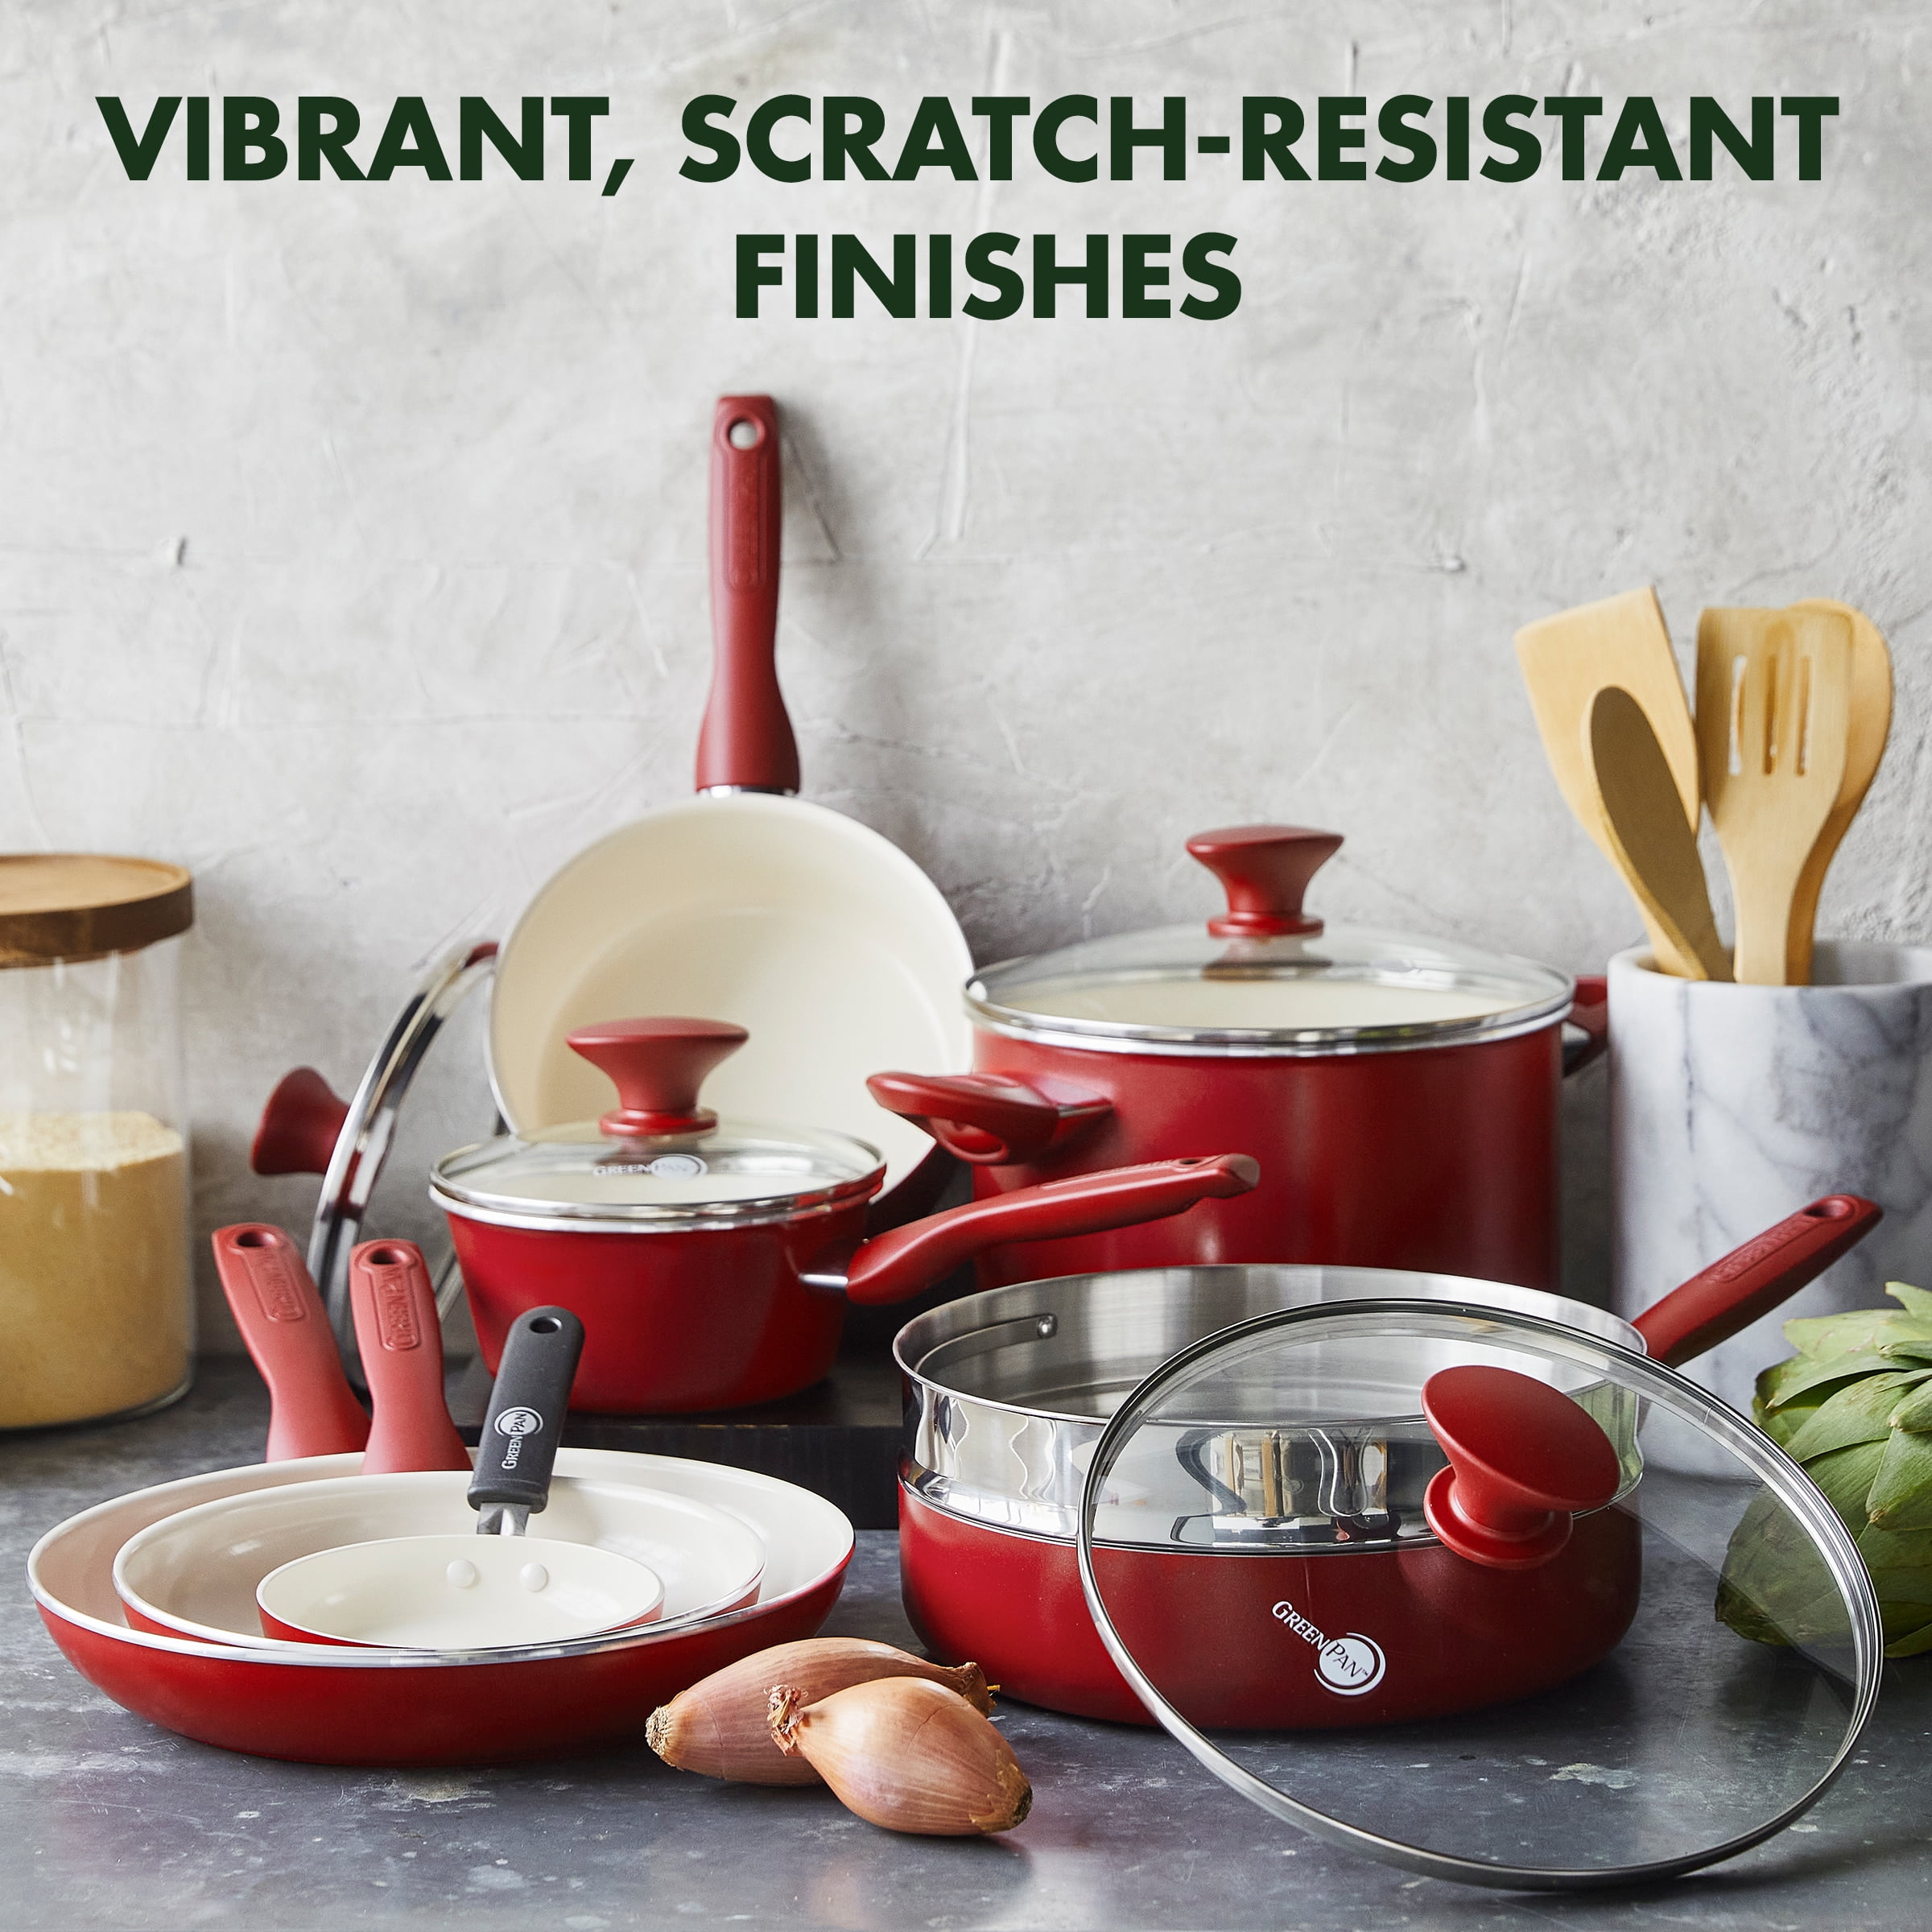  GreenPan Rio Healthy Ceramic Nonstick 16 Piece Cookware Pots  and Pans Set, PFAS-Free, Dishwasher Safe, Pink: Home & Kitchen